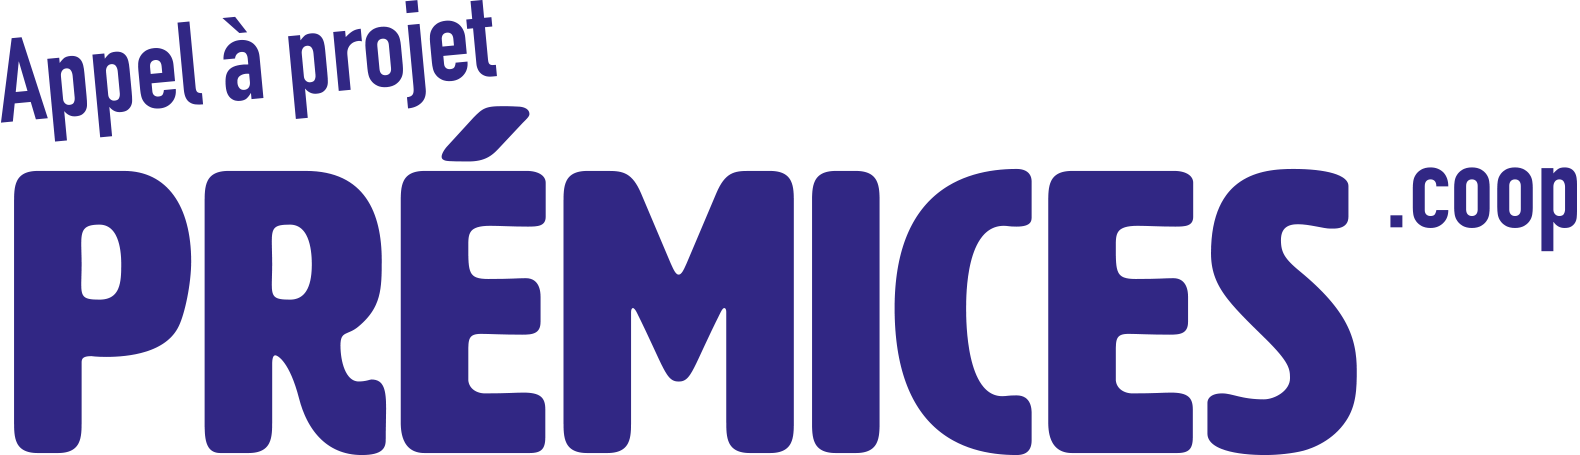 Logo de Prémices